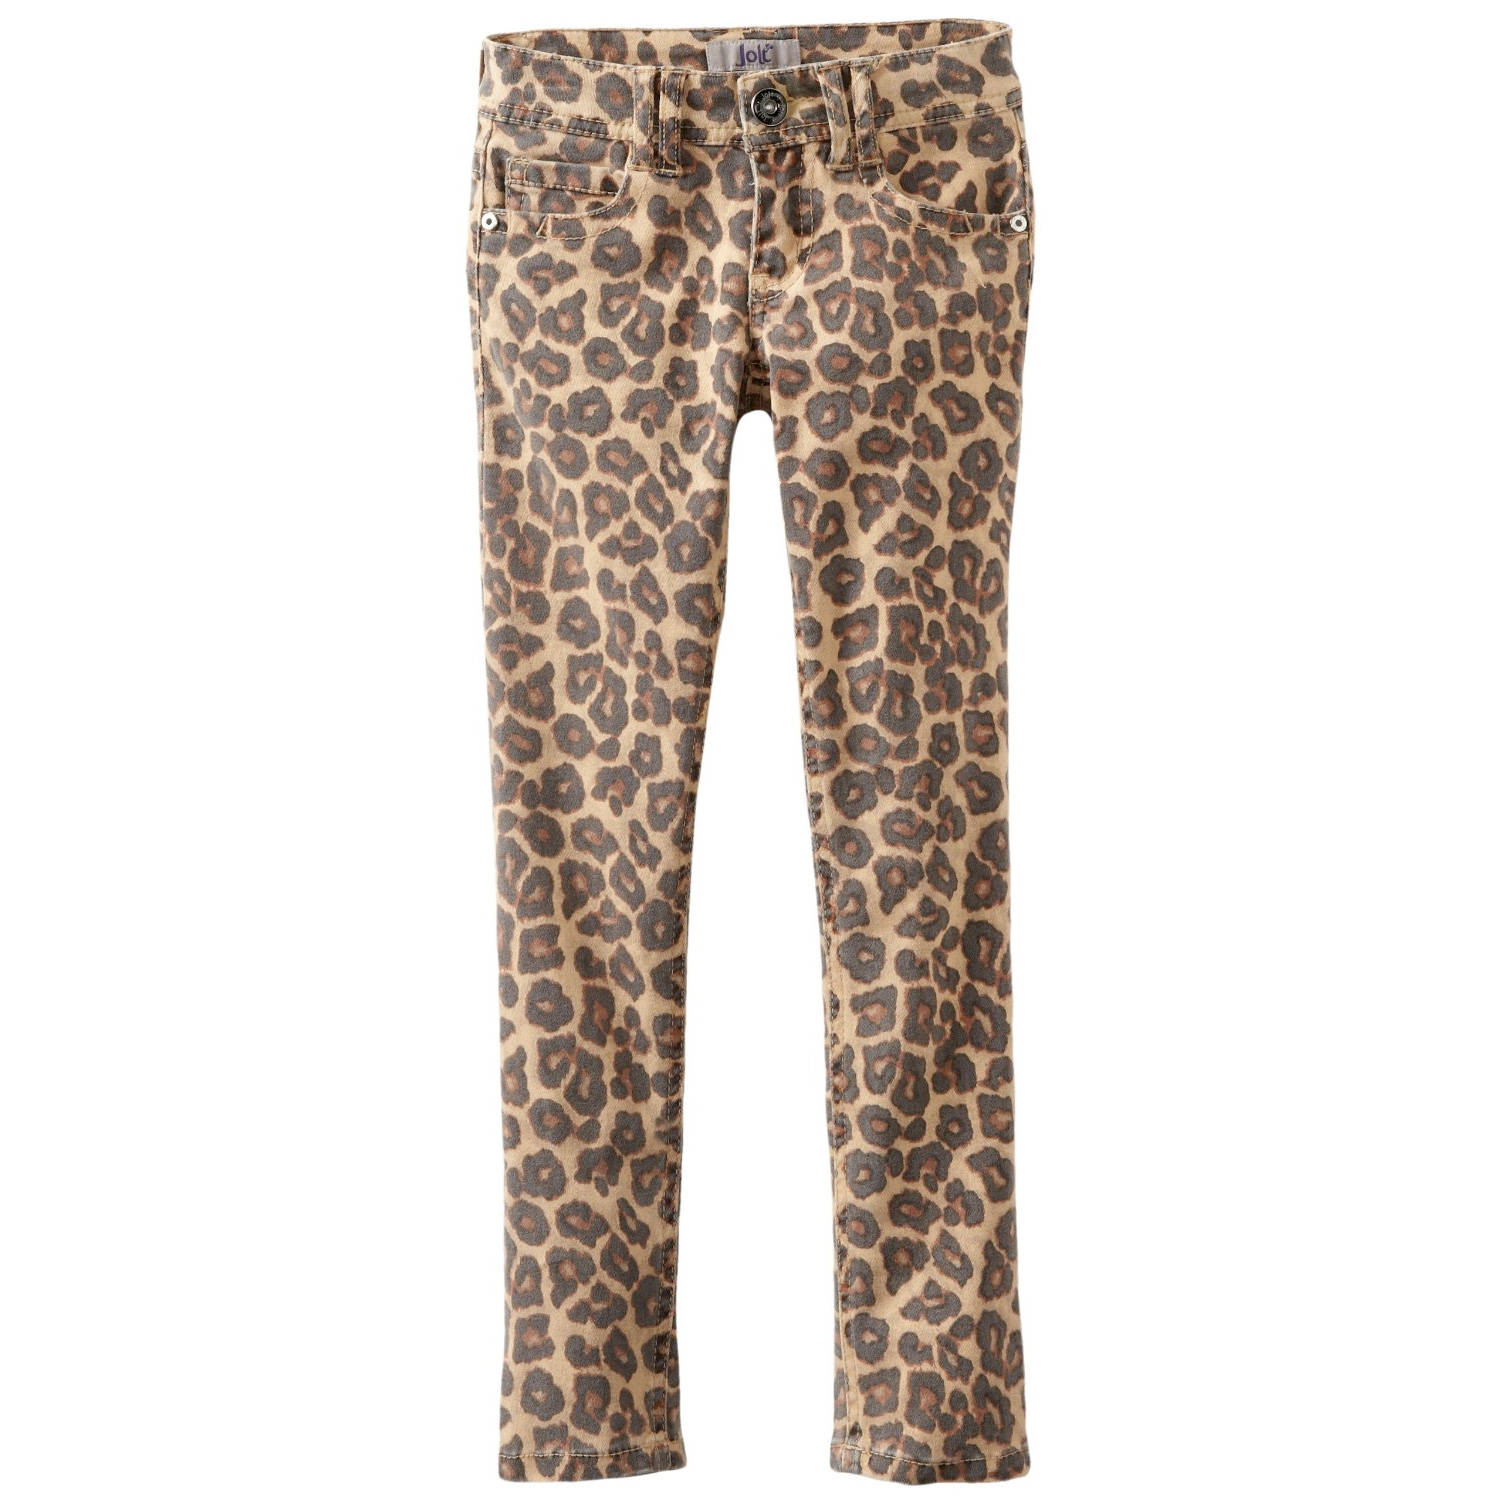 7-16 Leopard Skinny Fit Pant